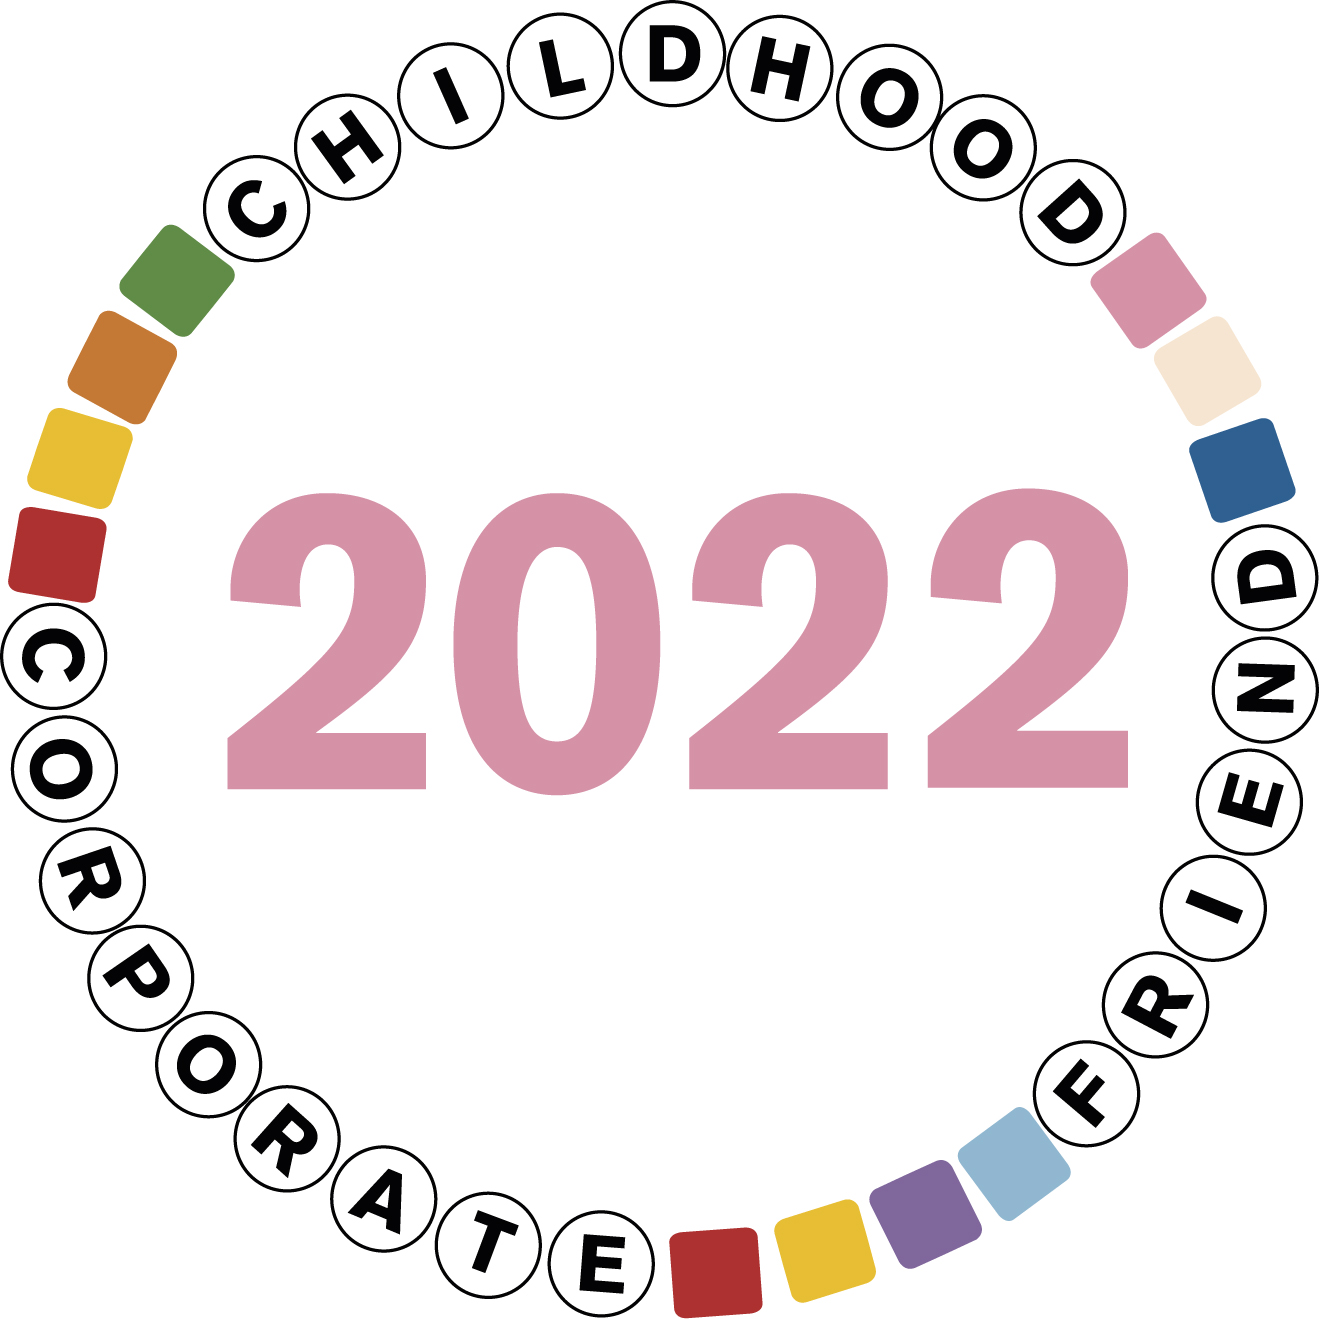 Childhood corporatefriend 2020